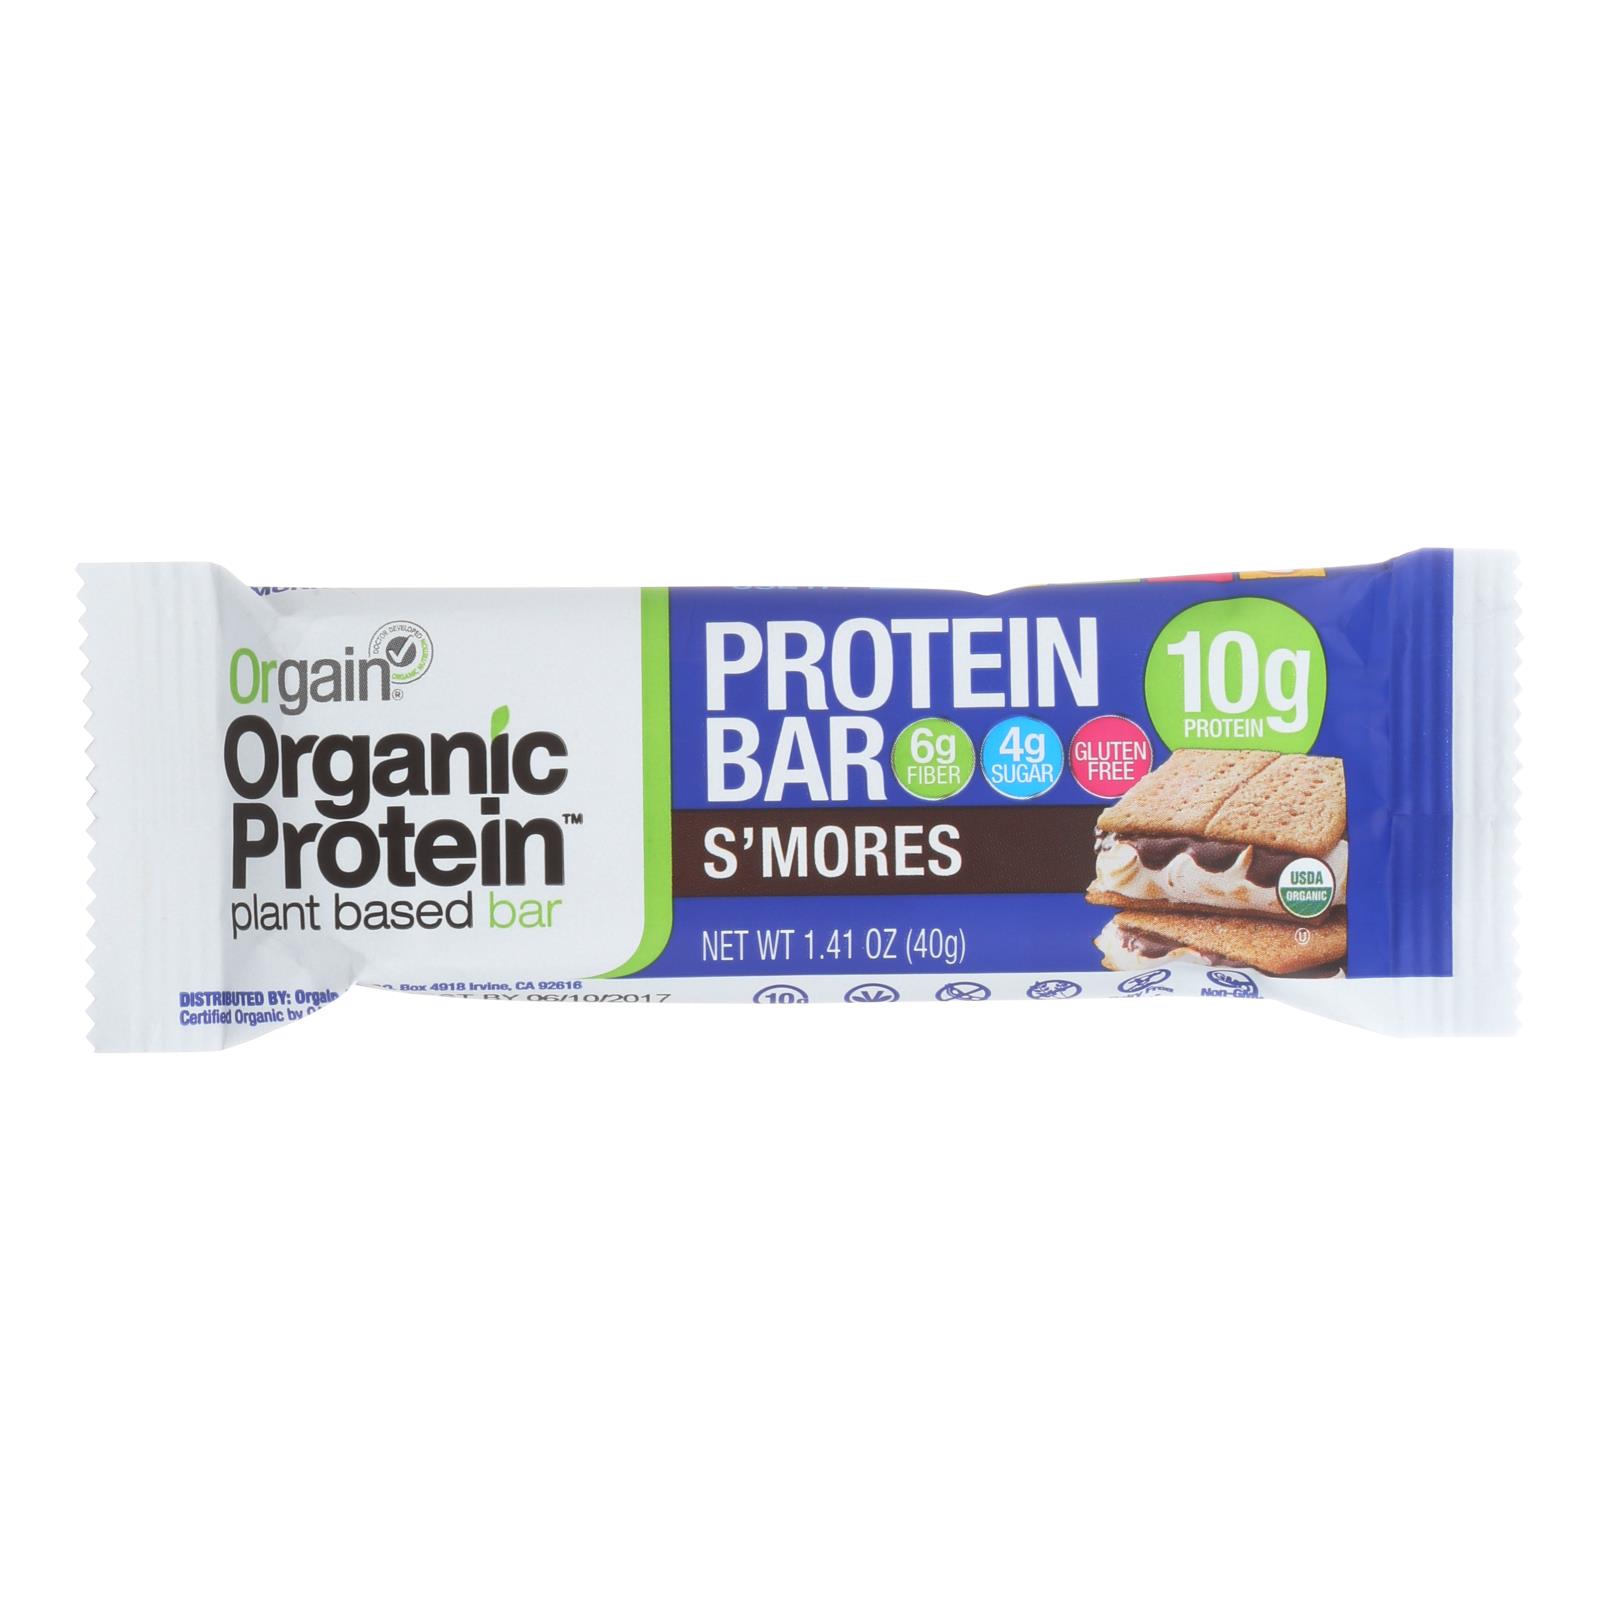 Orgain Organic Protein Bar - S'mores - 12개 묶음상품 - 1.41 OZ